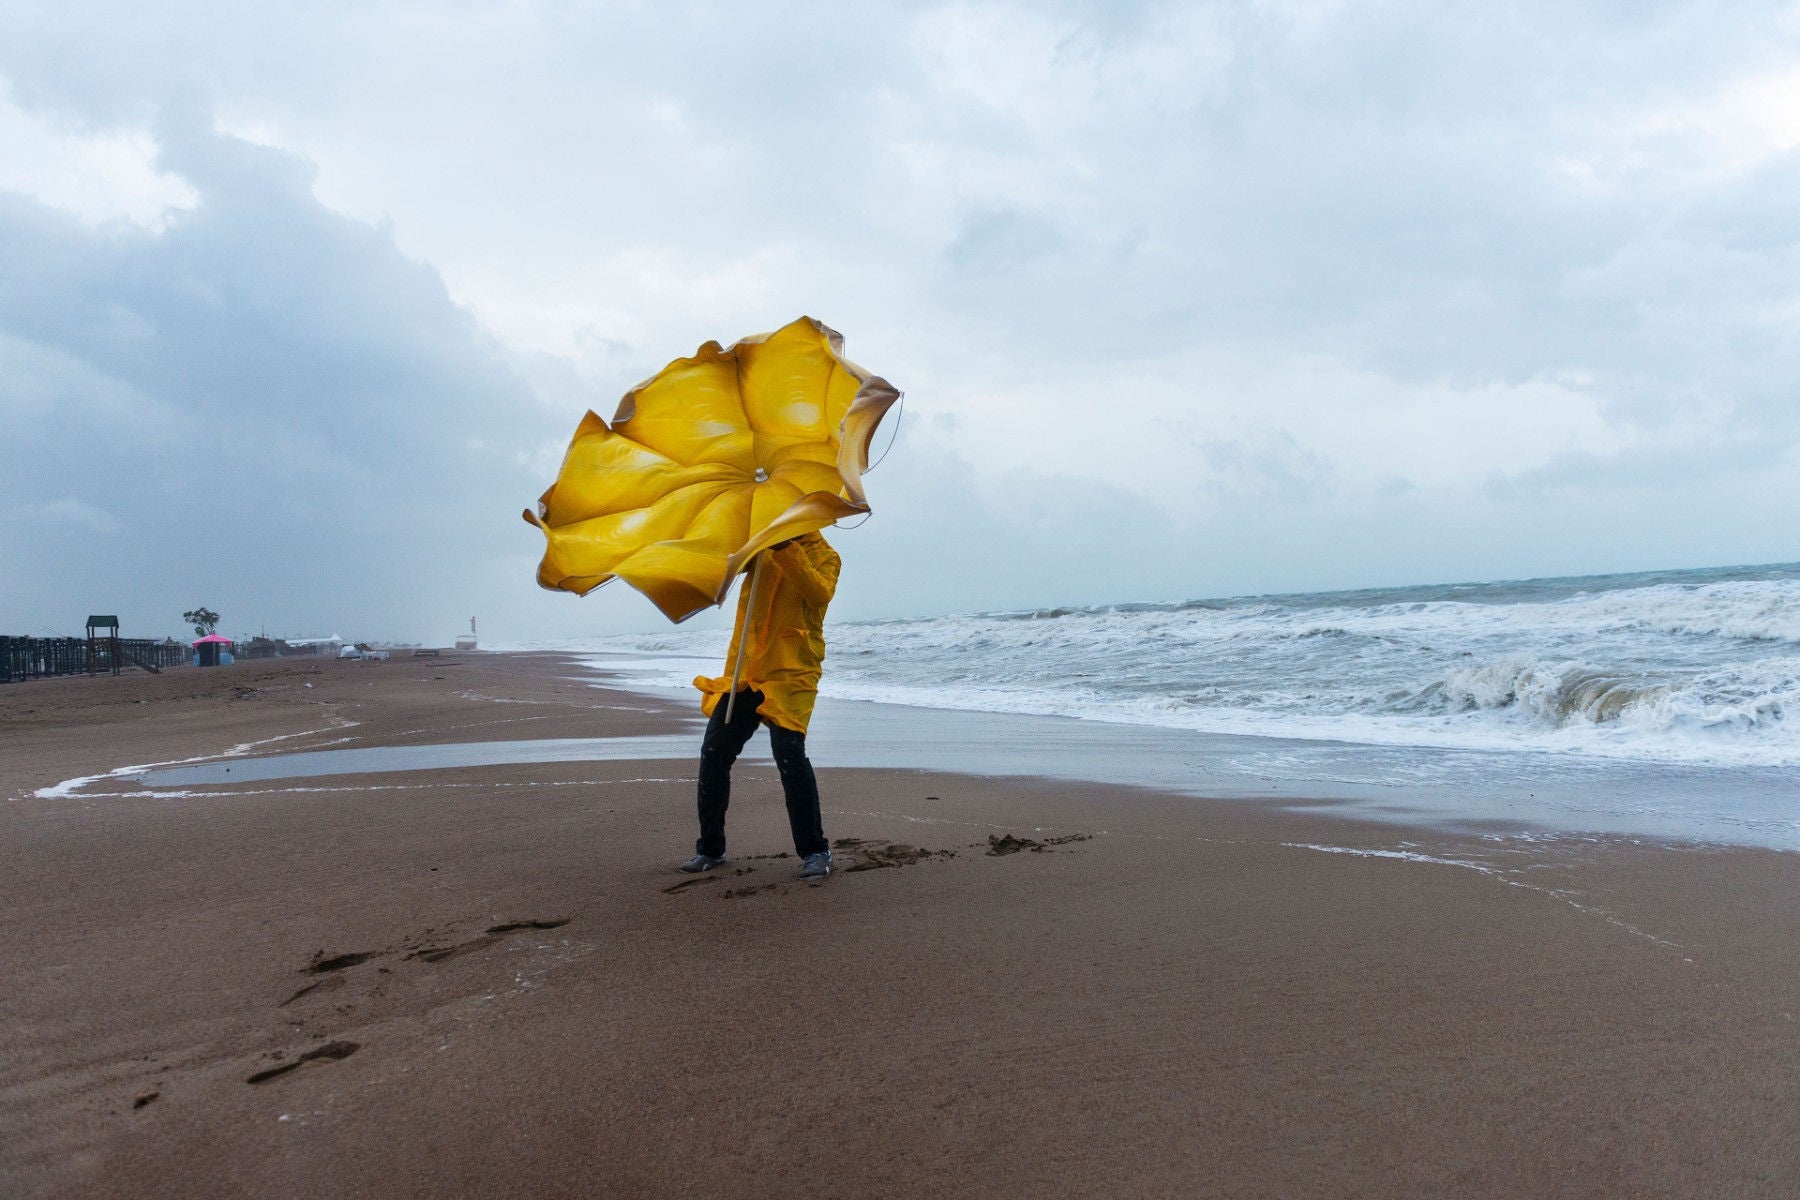 Man on stormy beach with yellow umbrella